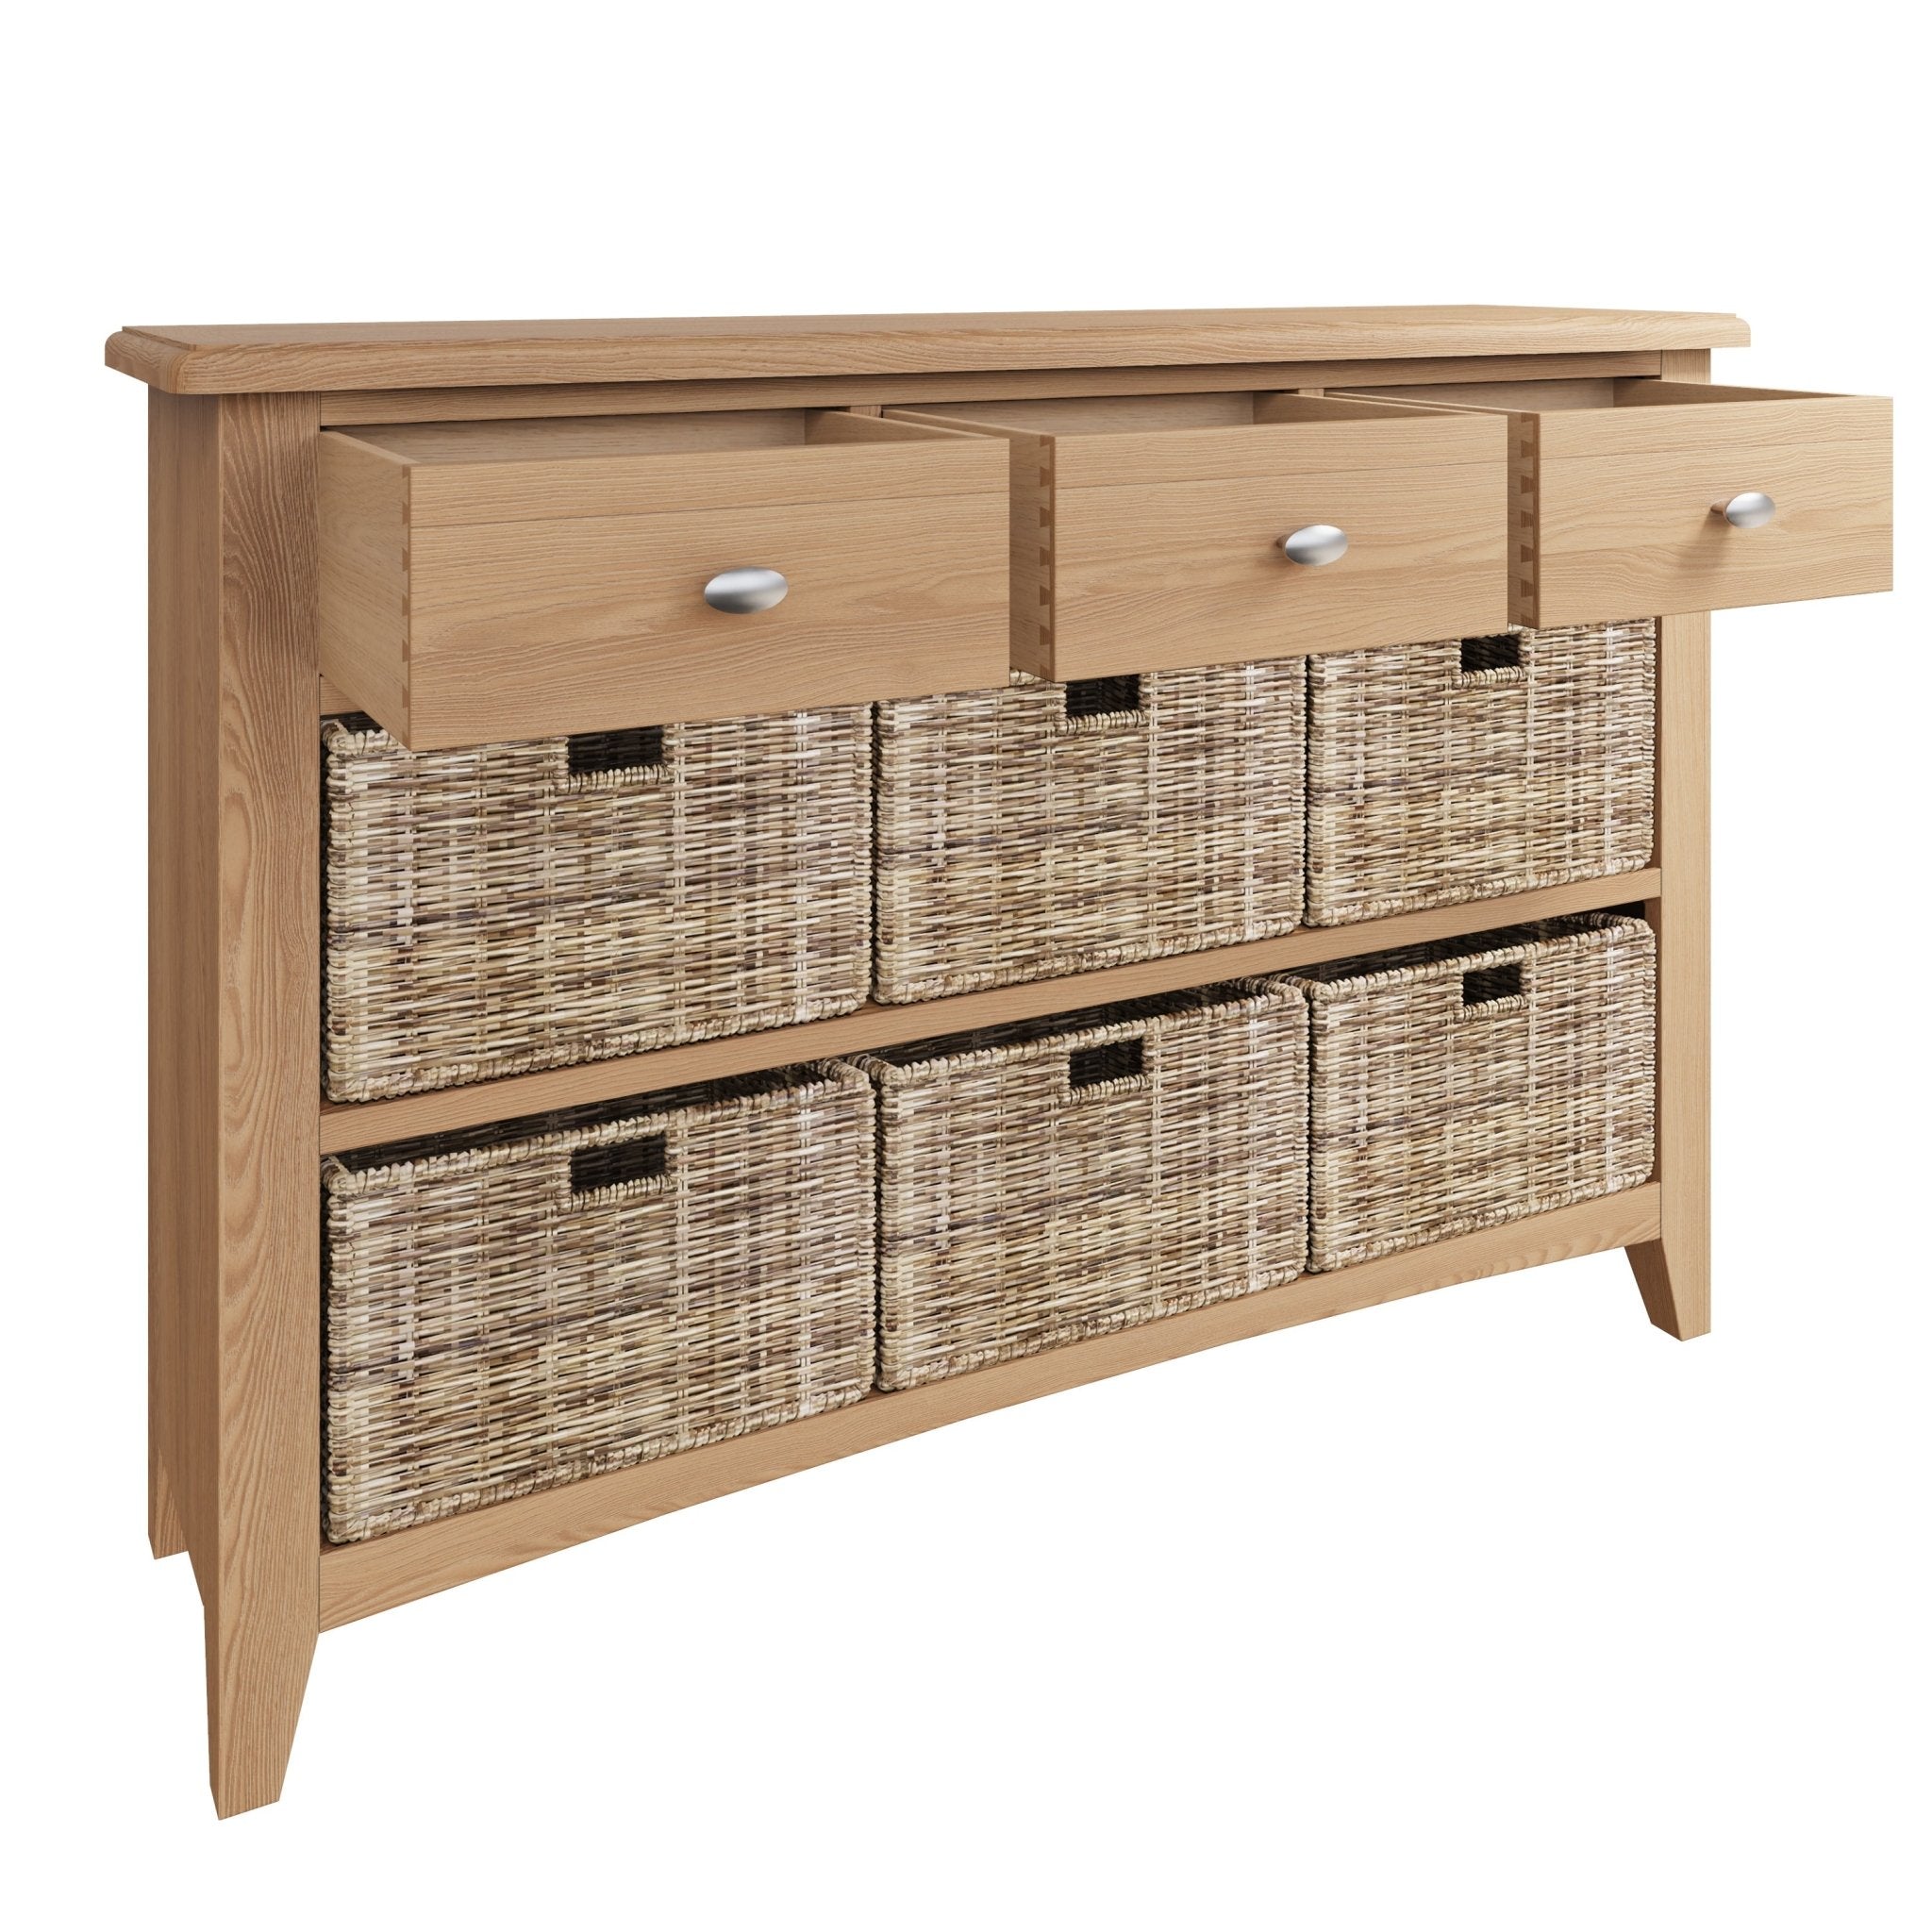 Ockley Oak 3 Drawer 6 Basket Cabinet - Duck Barn Interiors